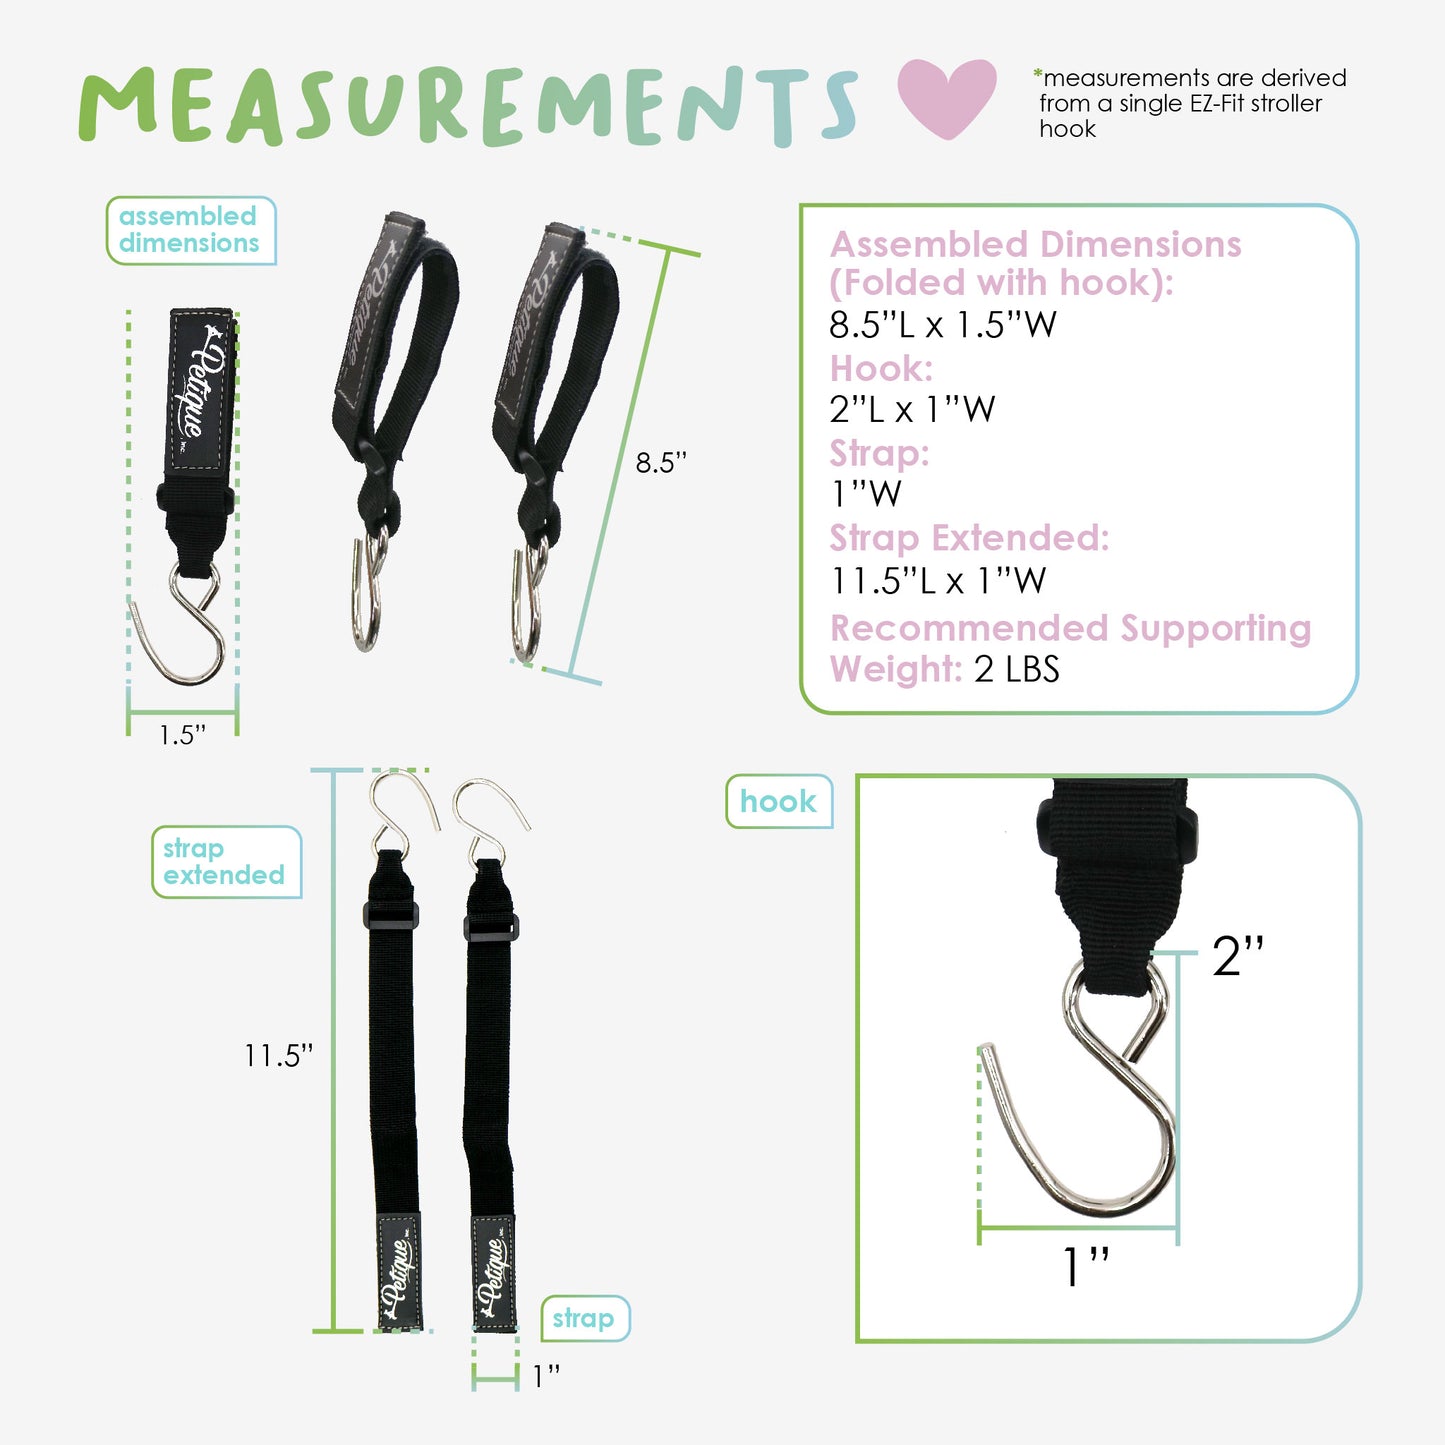 ez-fit stroller hook measurements